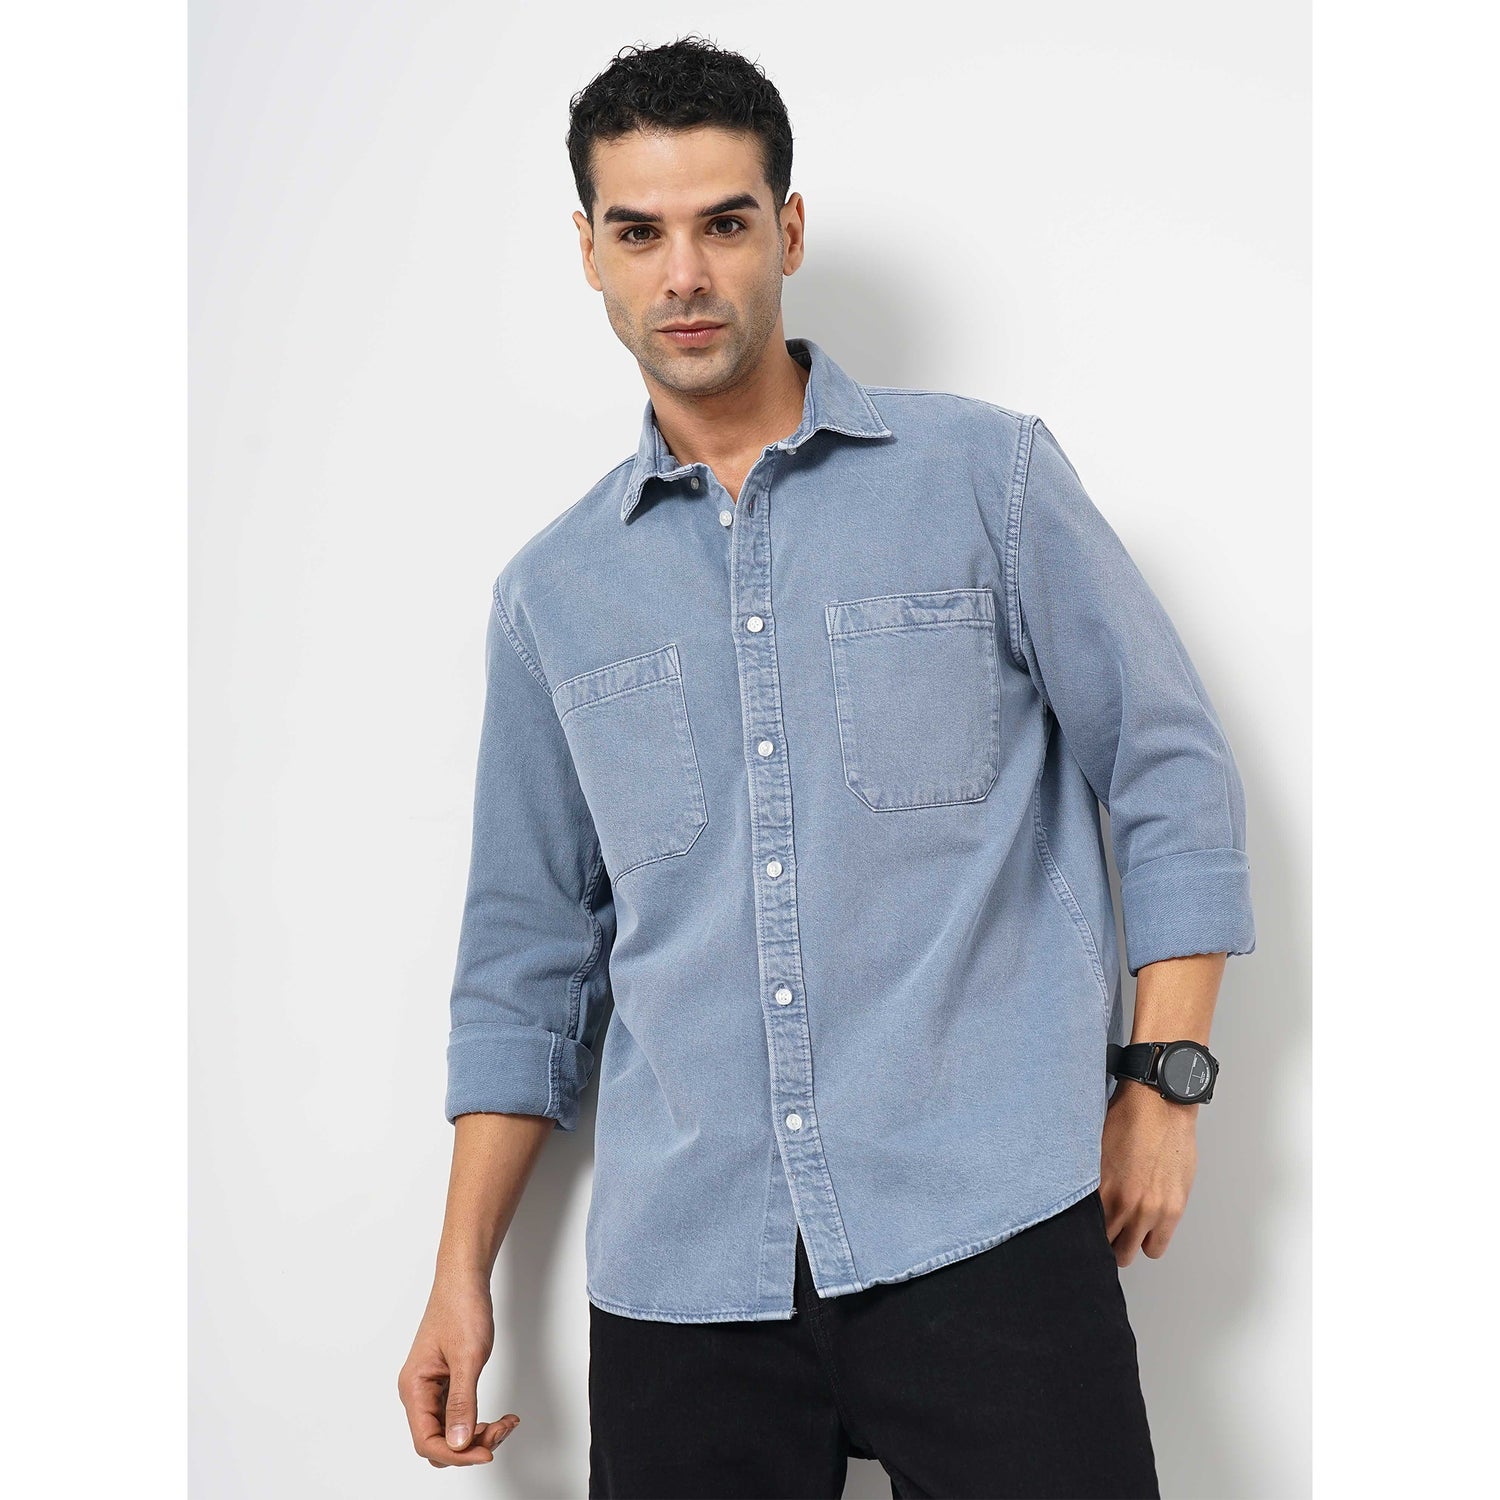 Men's Blue Solid Slim Fit Cotton Denim Casual Shirt (GAINDIEIN)